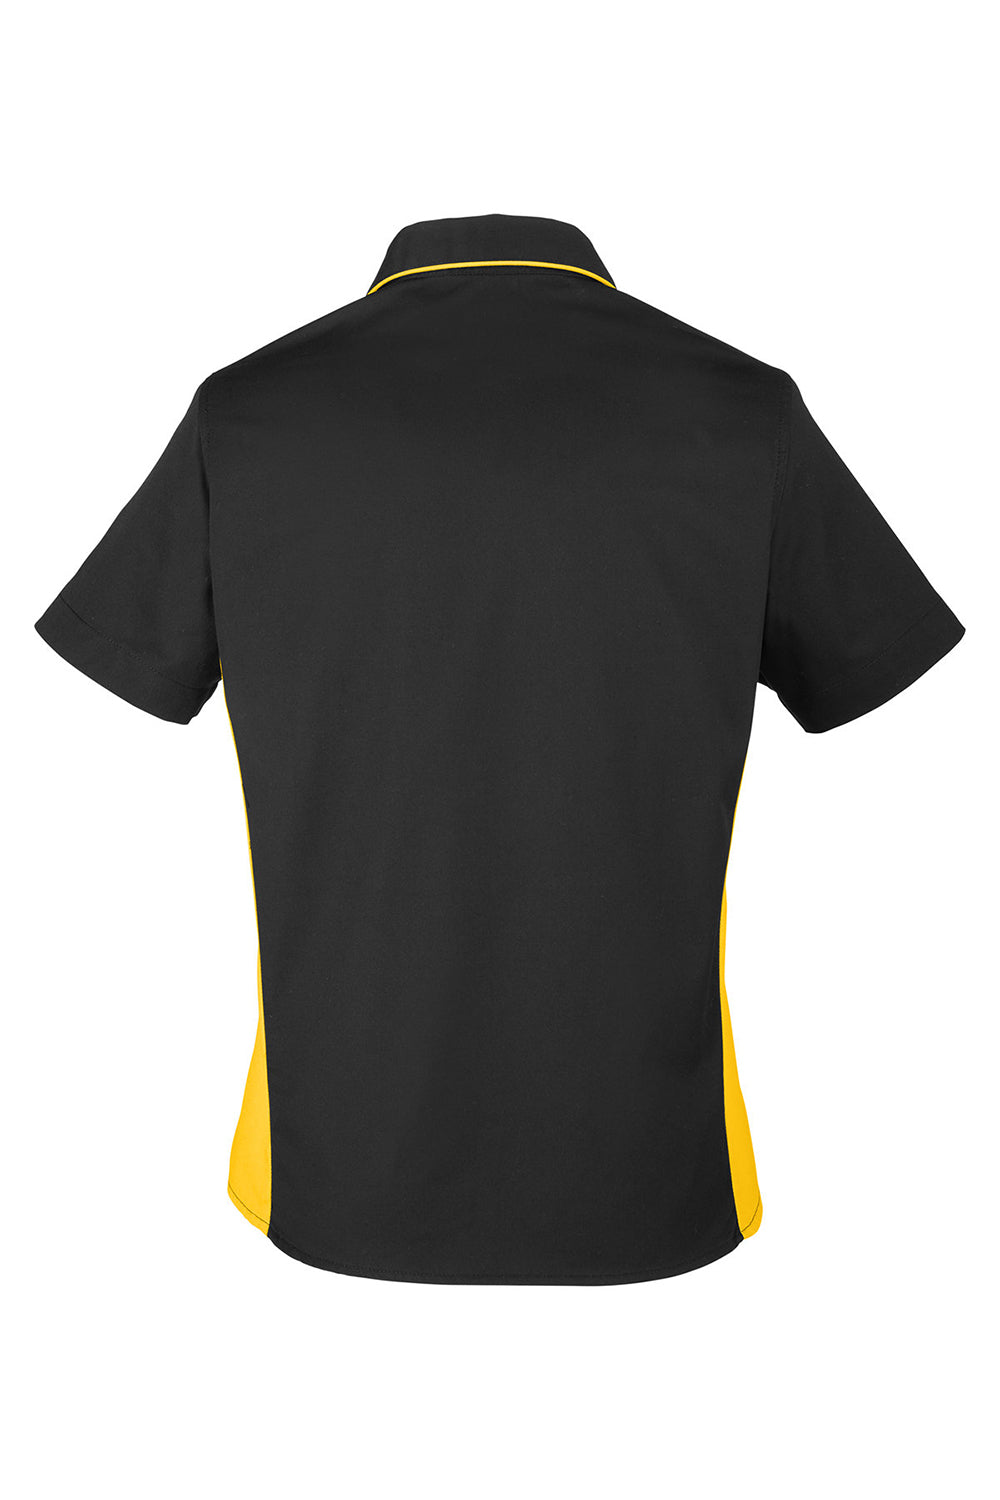 Harriton M586W Womens Flash Colorblock Short Sleeve Button Down Shirt Black/Sunray Yellow Flat Back